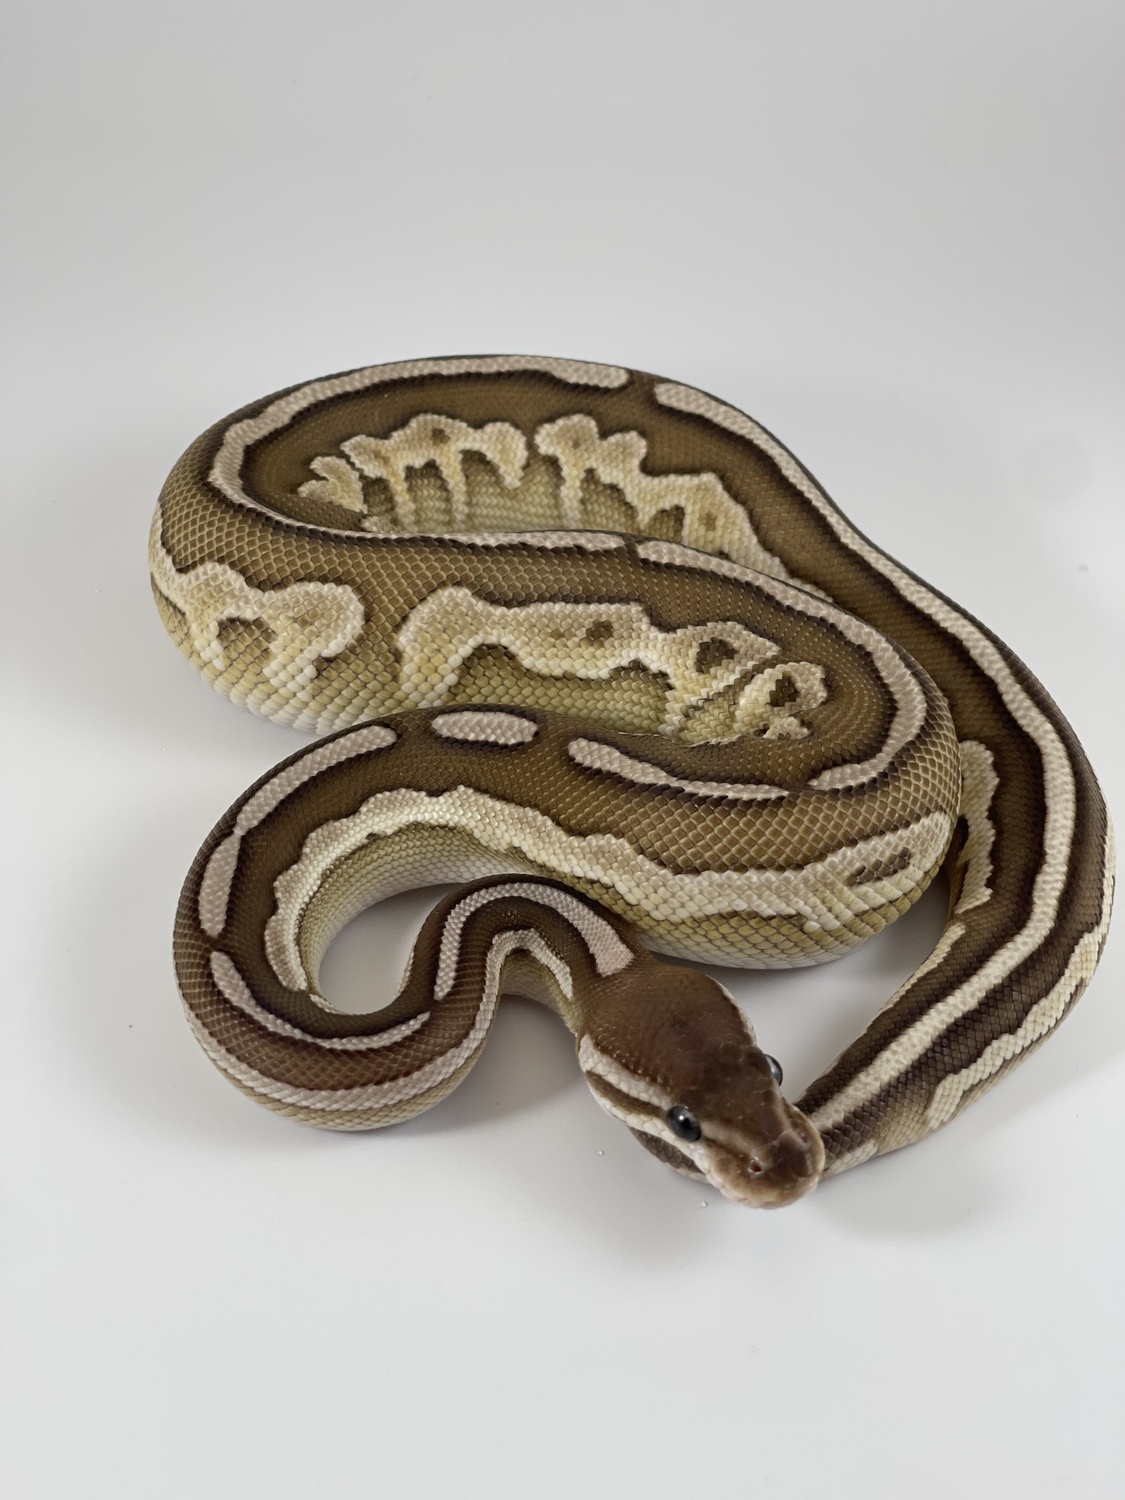 Lesser Cinnamon Fusion Ball Python by Family Reptiles Lakeland